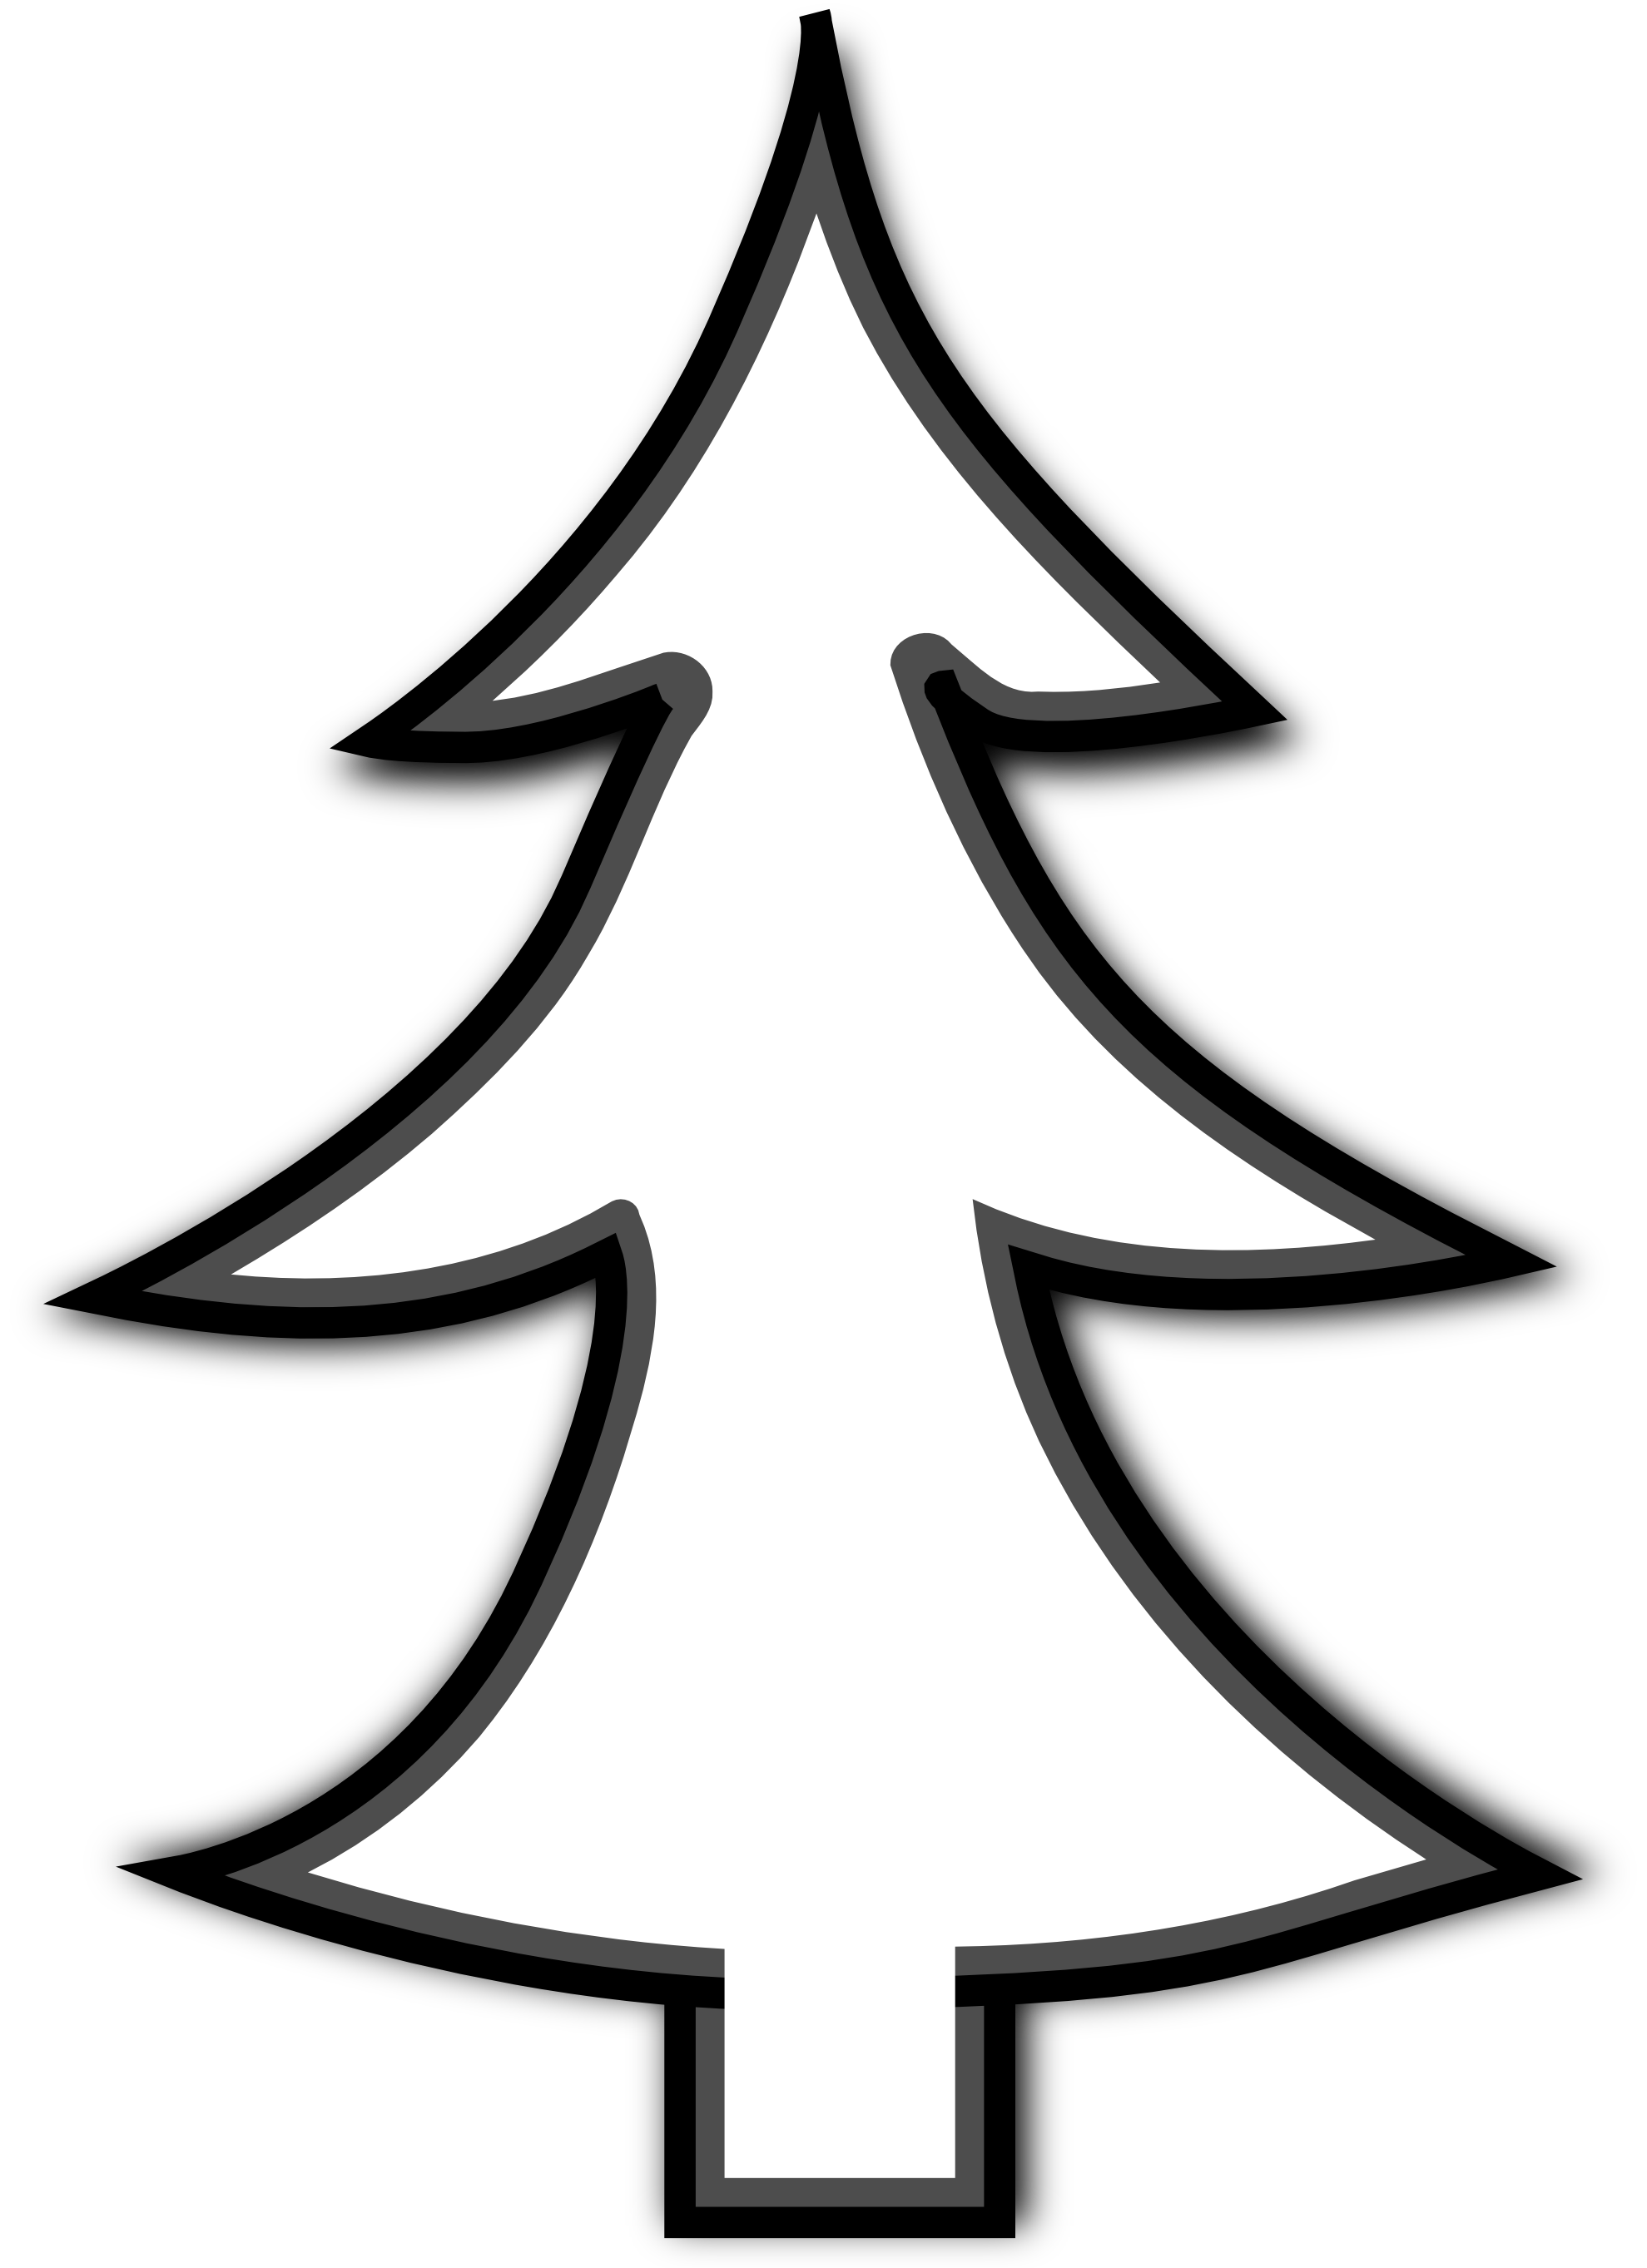 Christmas Tree Silhouette Clip Art